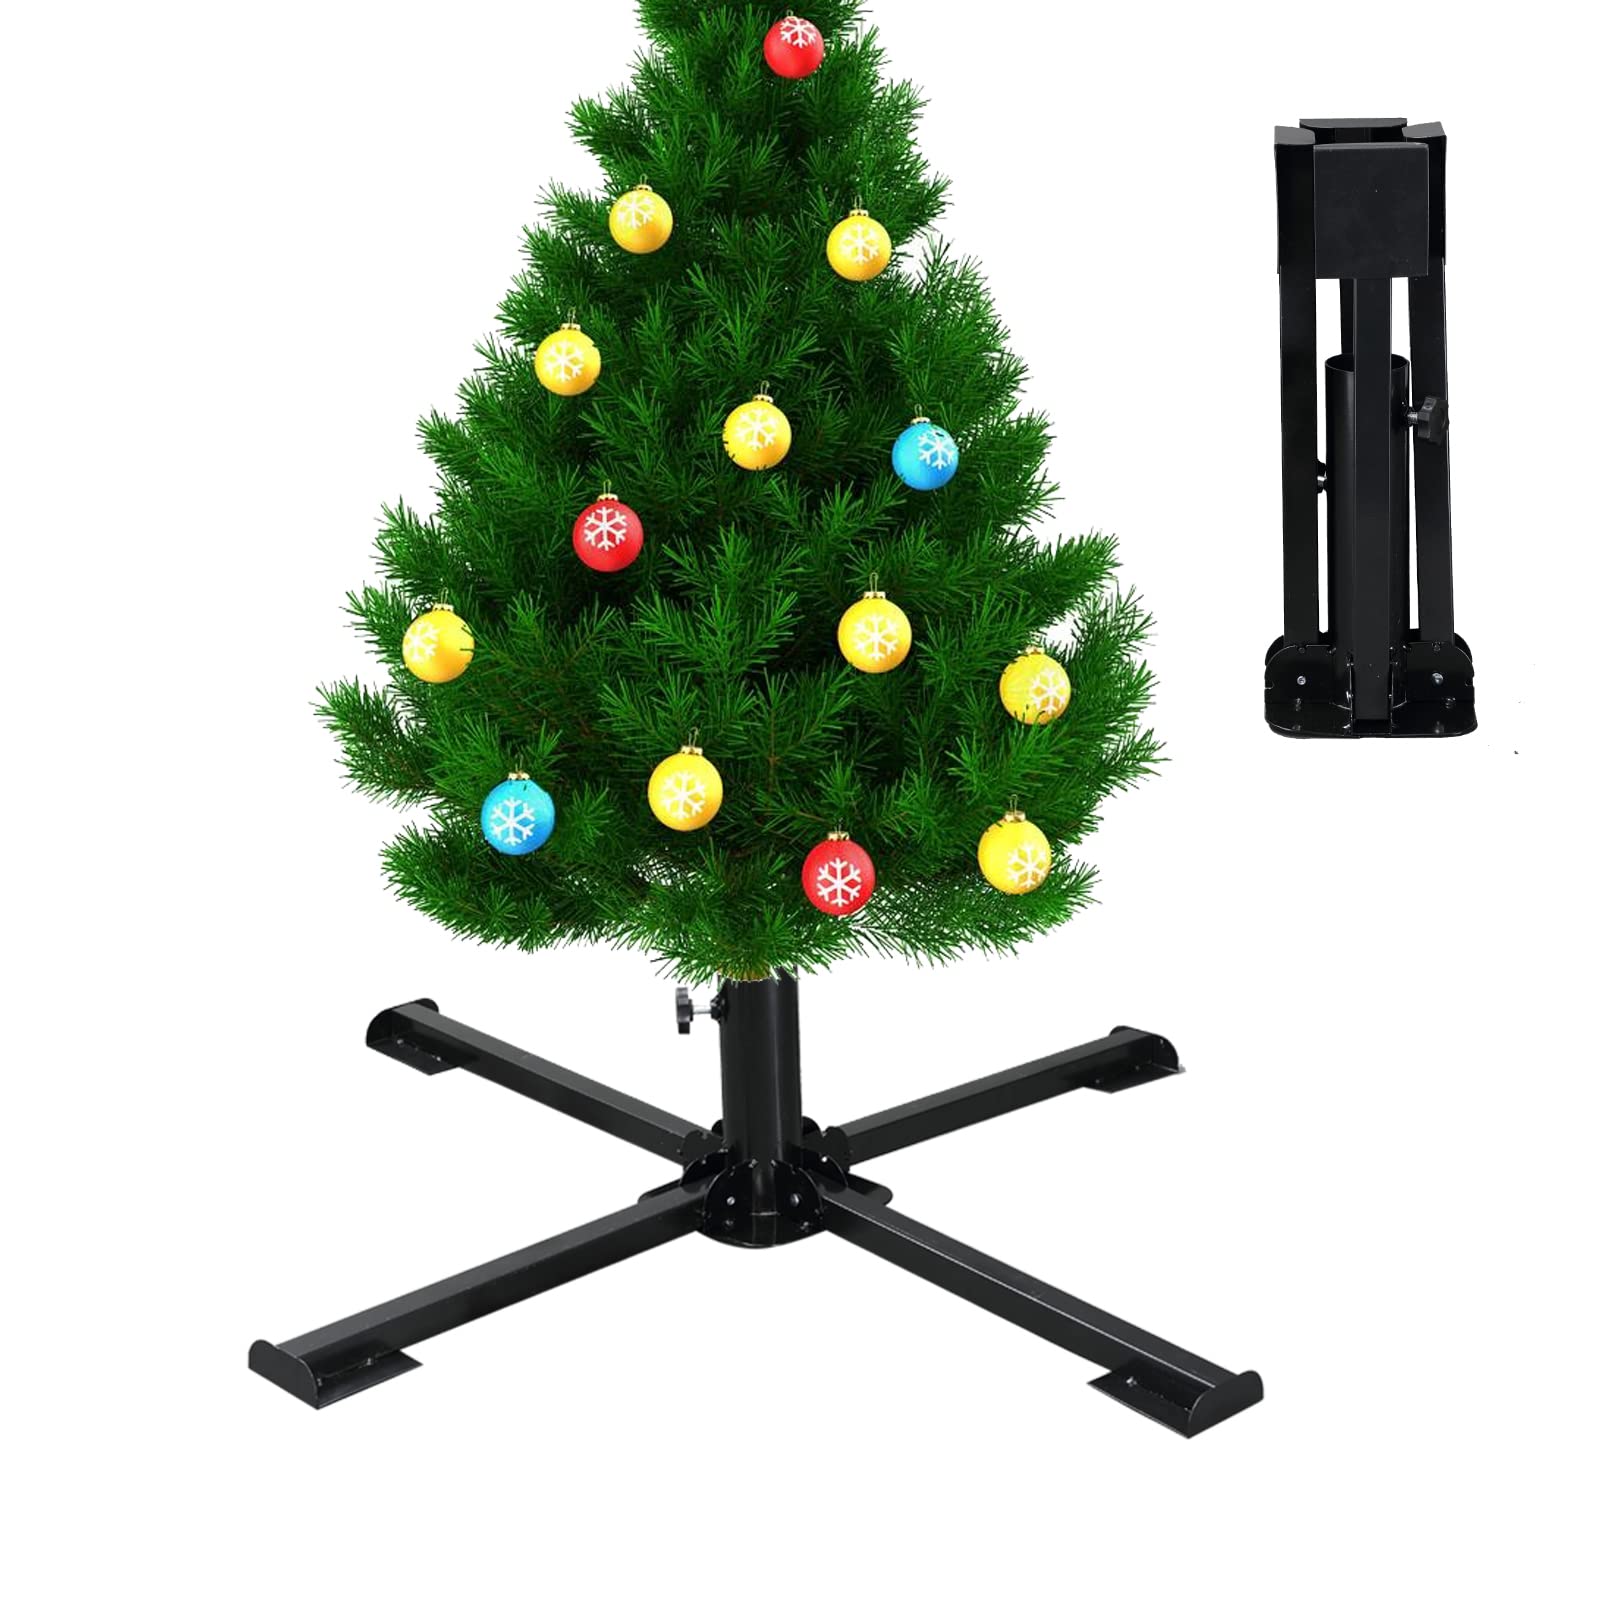 Where To Buy Christmas Tree Stand?